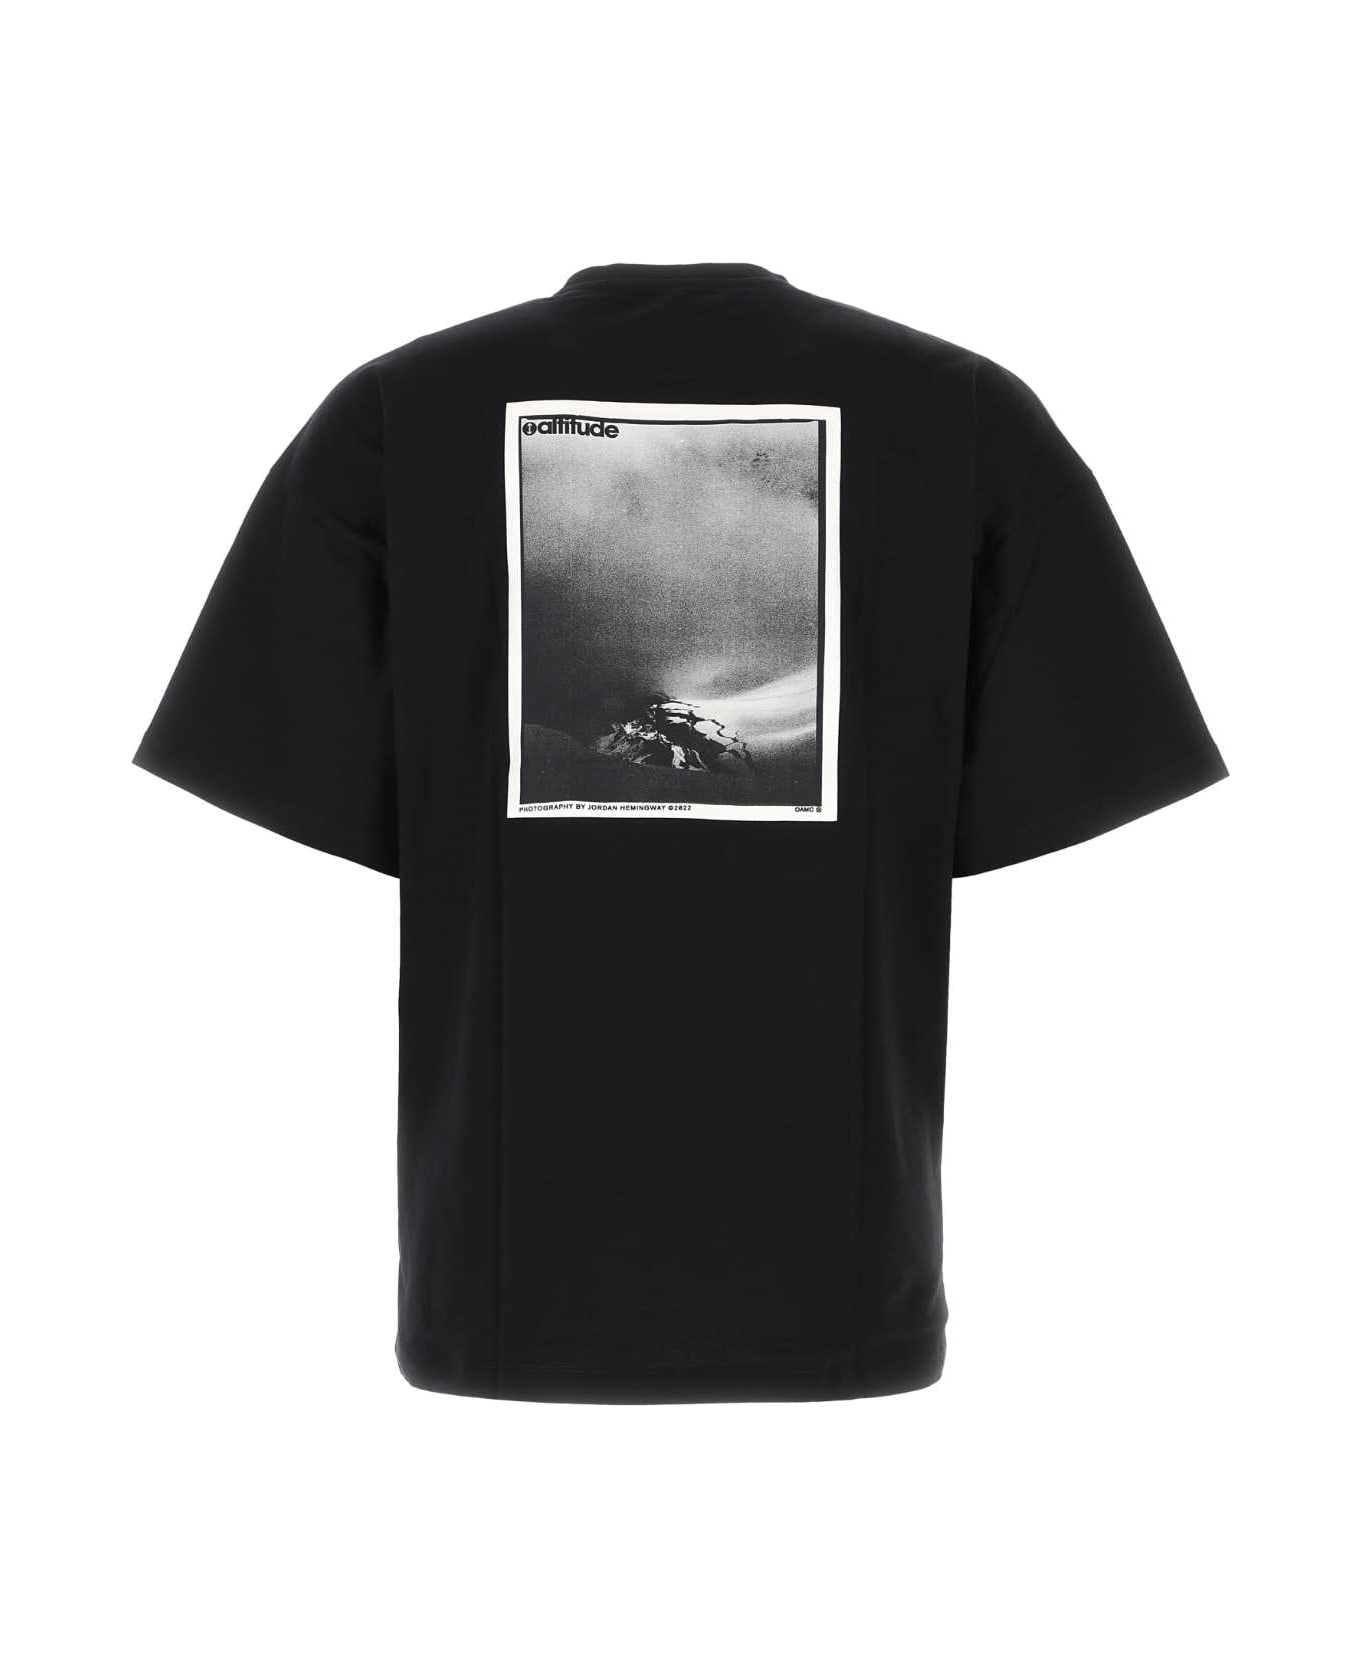 OAMC Black Cotton Oversize T-shirt - BLACK シャツ